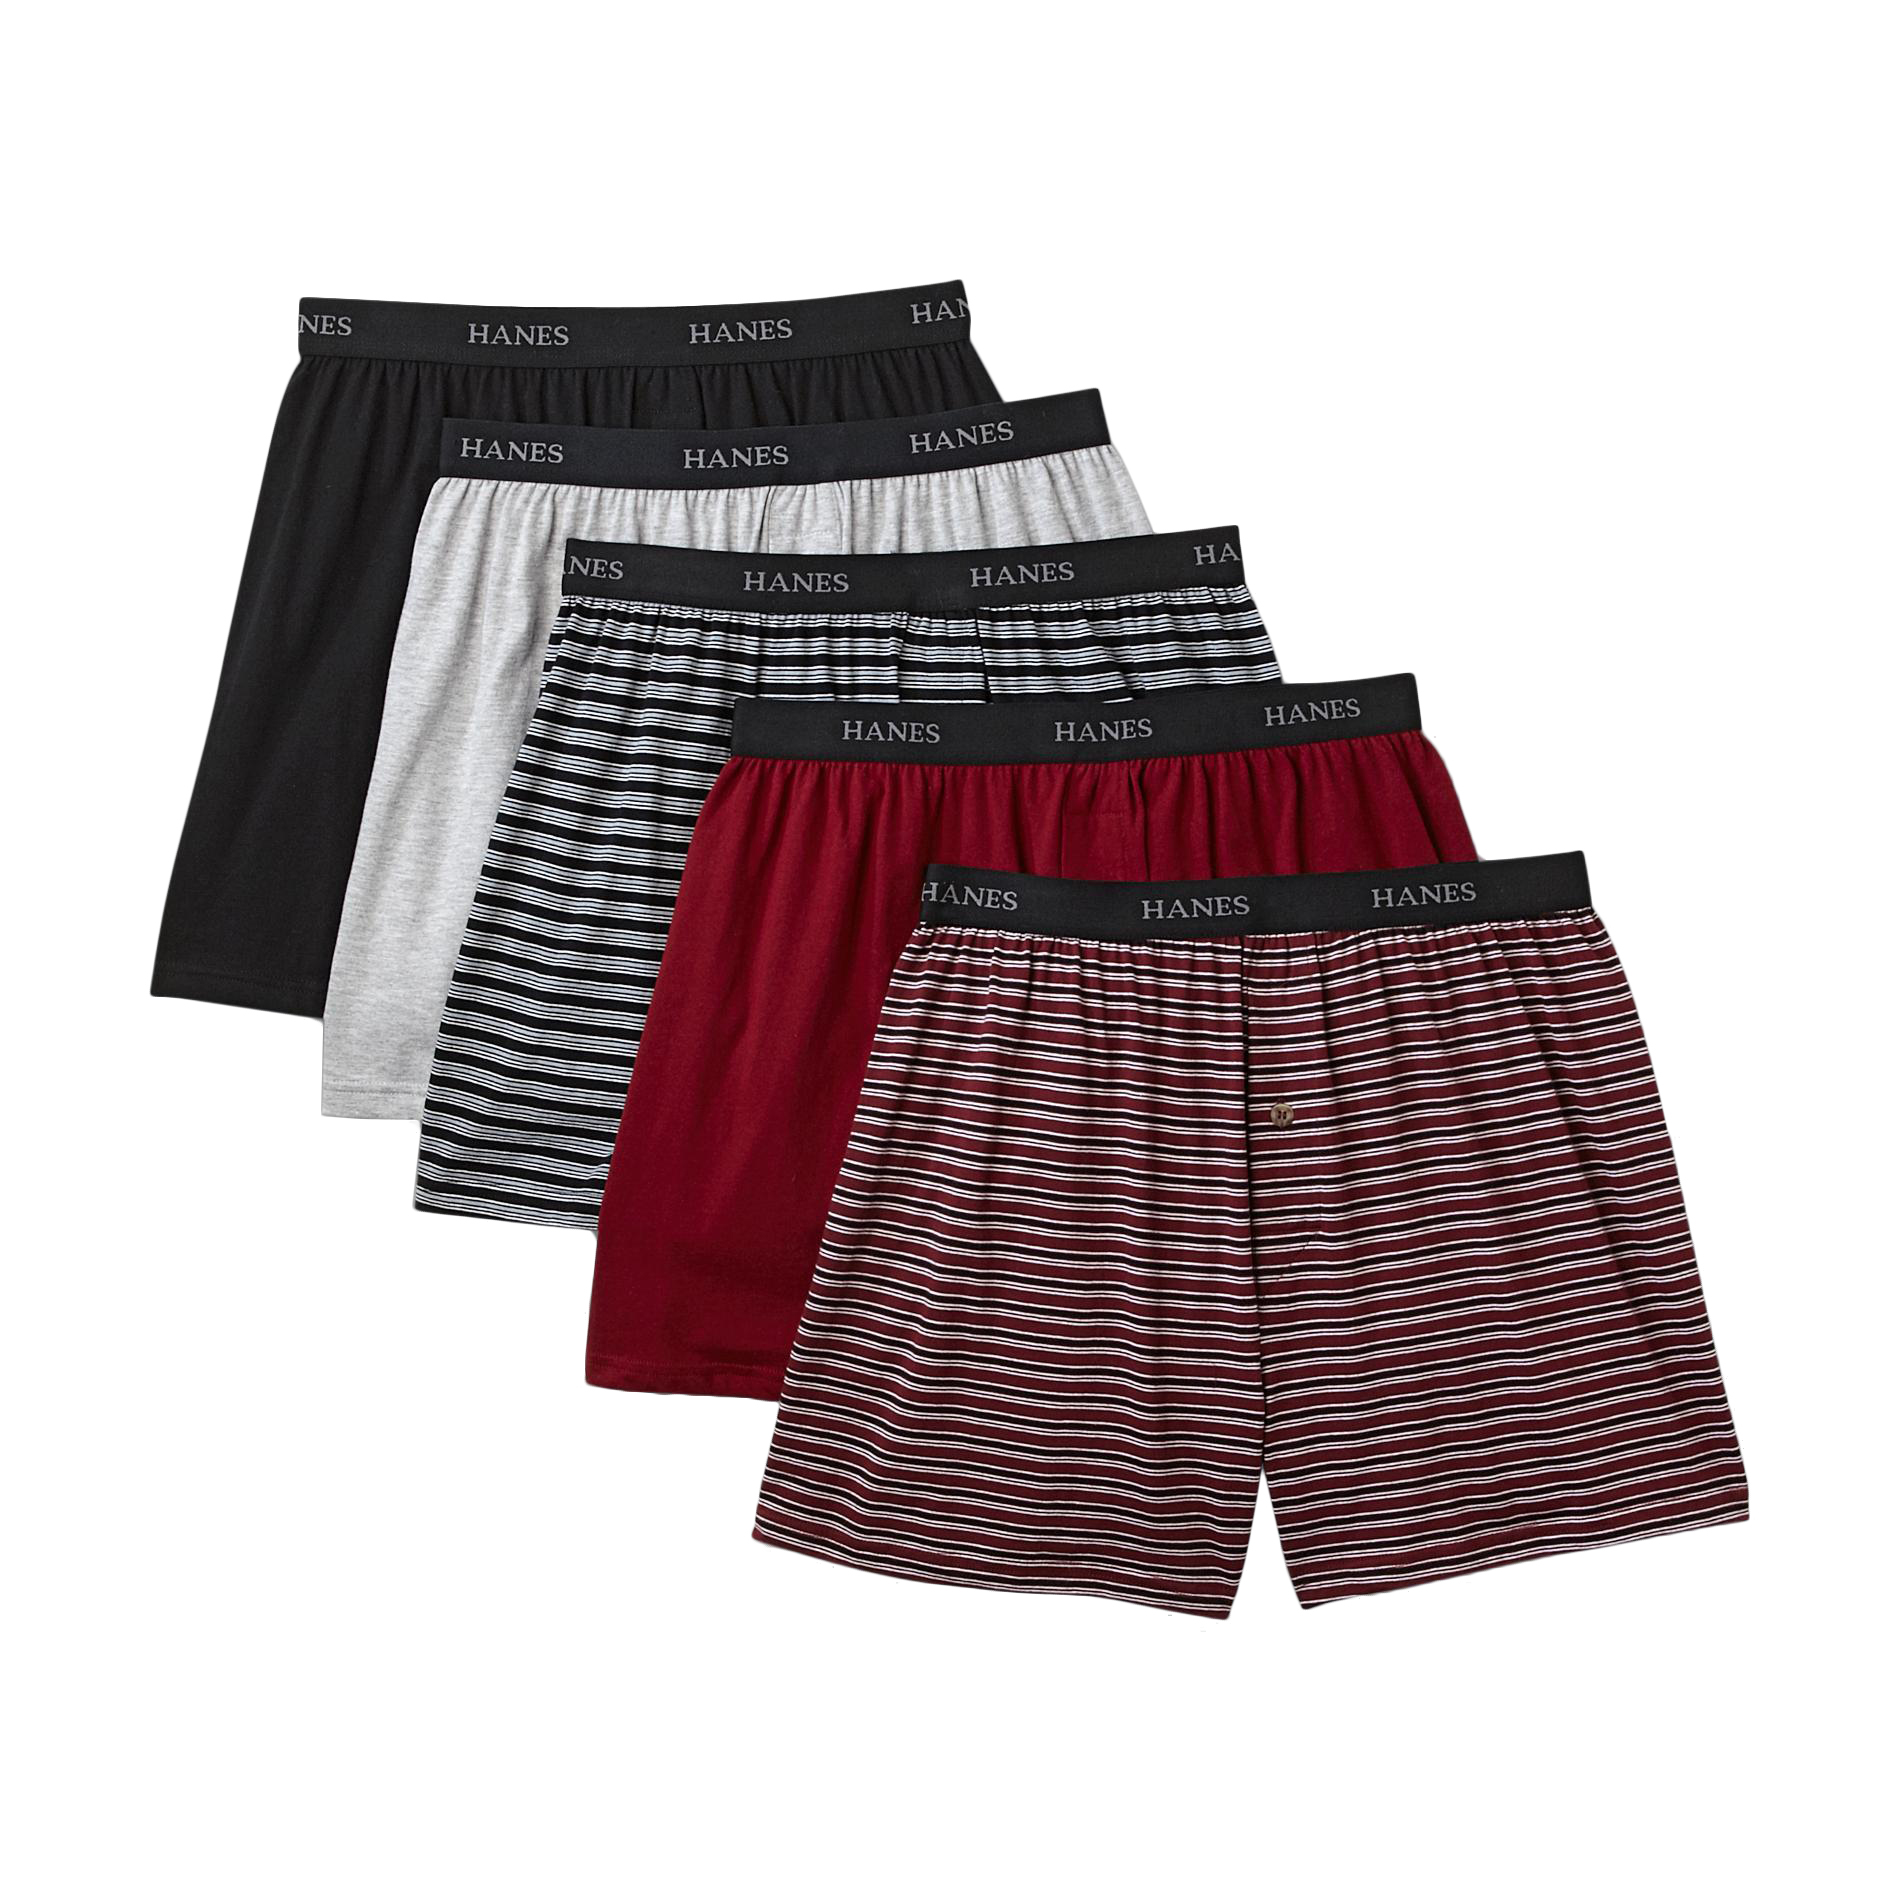 Hanes Men's Ultimate Knit Boxer Shorts - 5 Pack